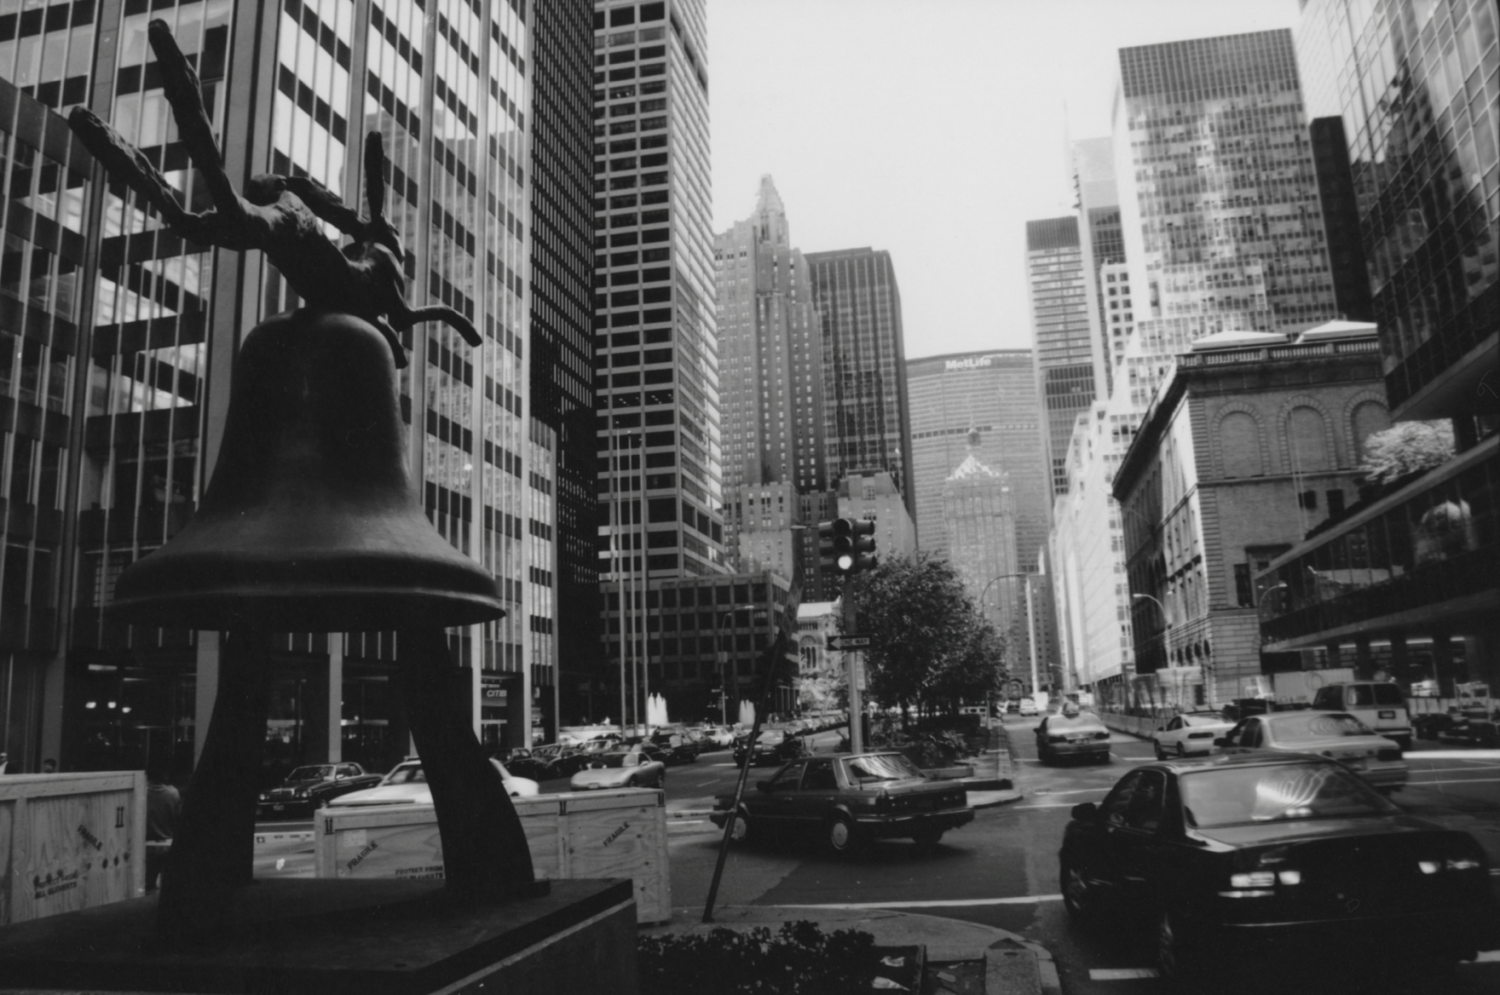 ‘Barry Flanagan on Park Avenue’, New York, USA (1995)